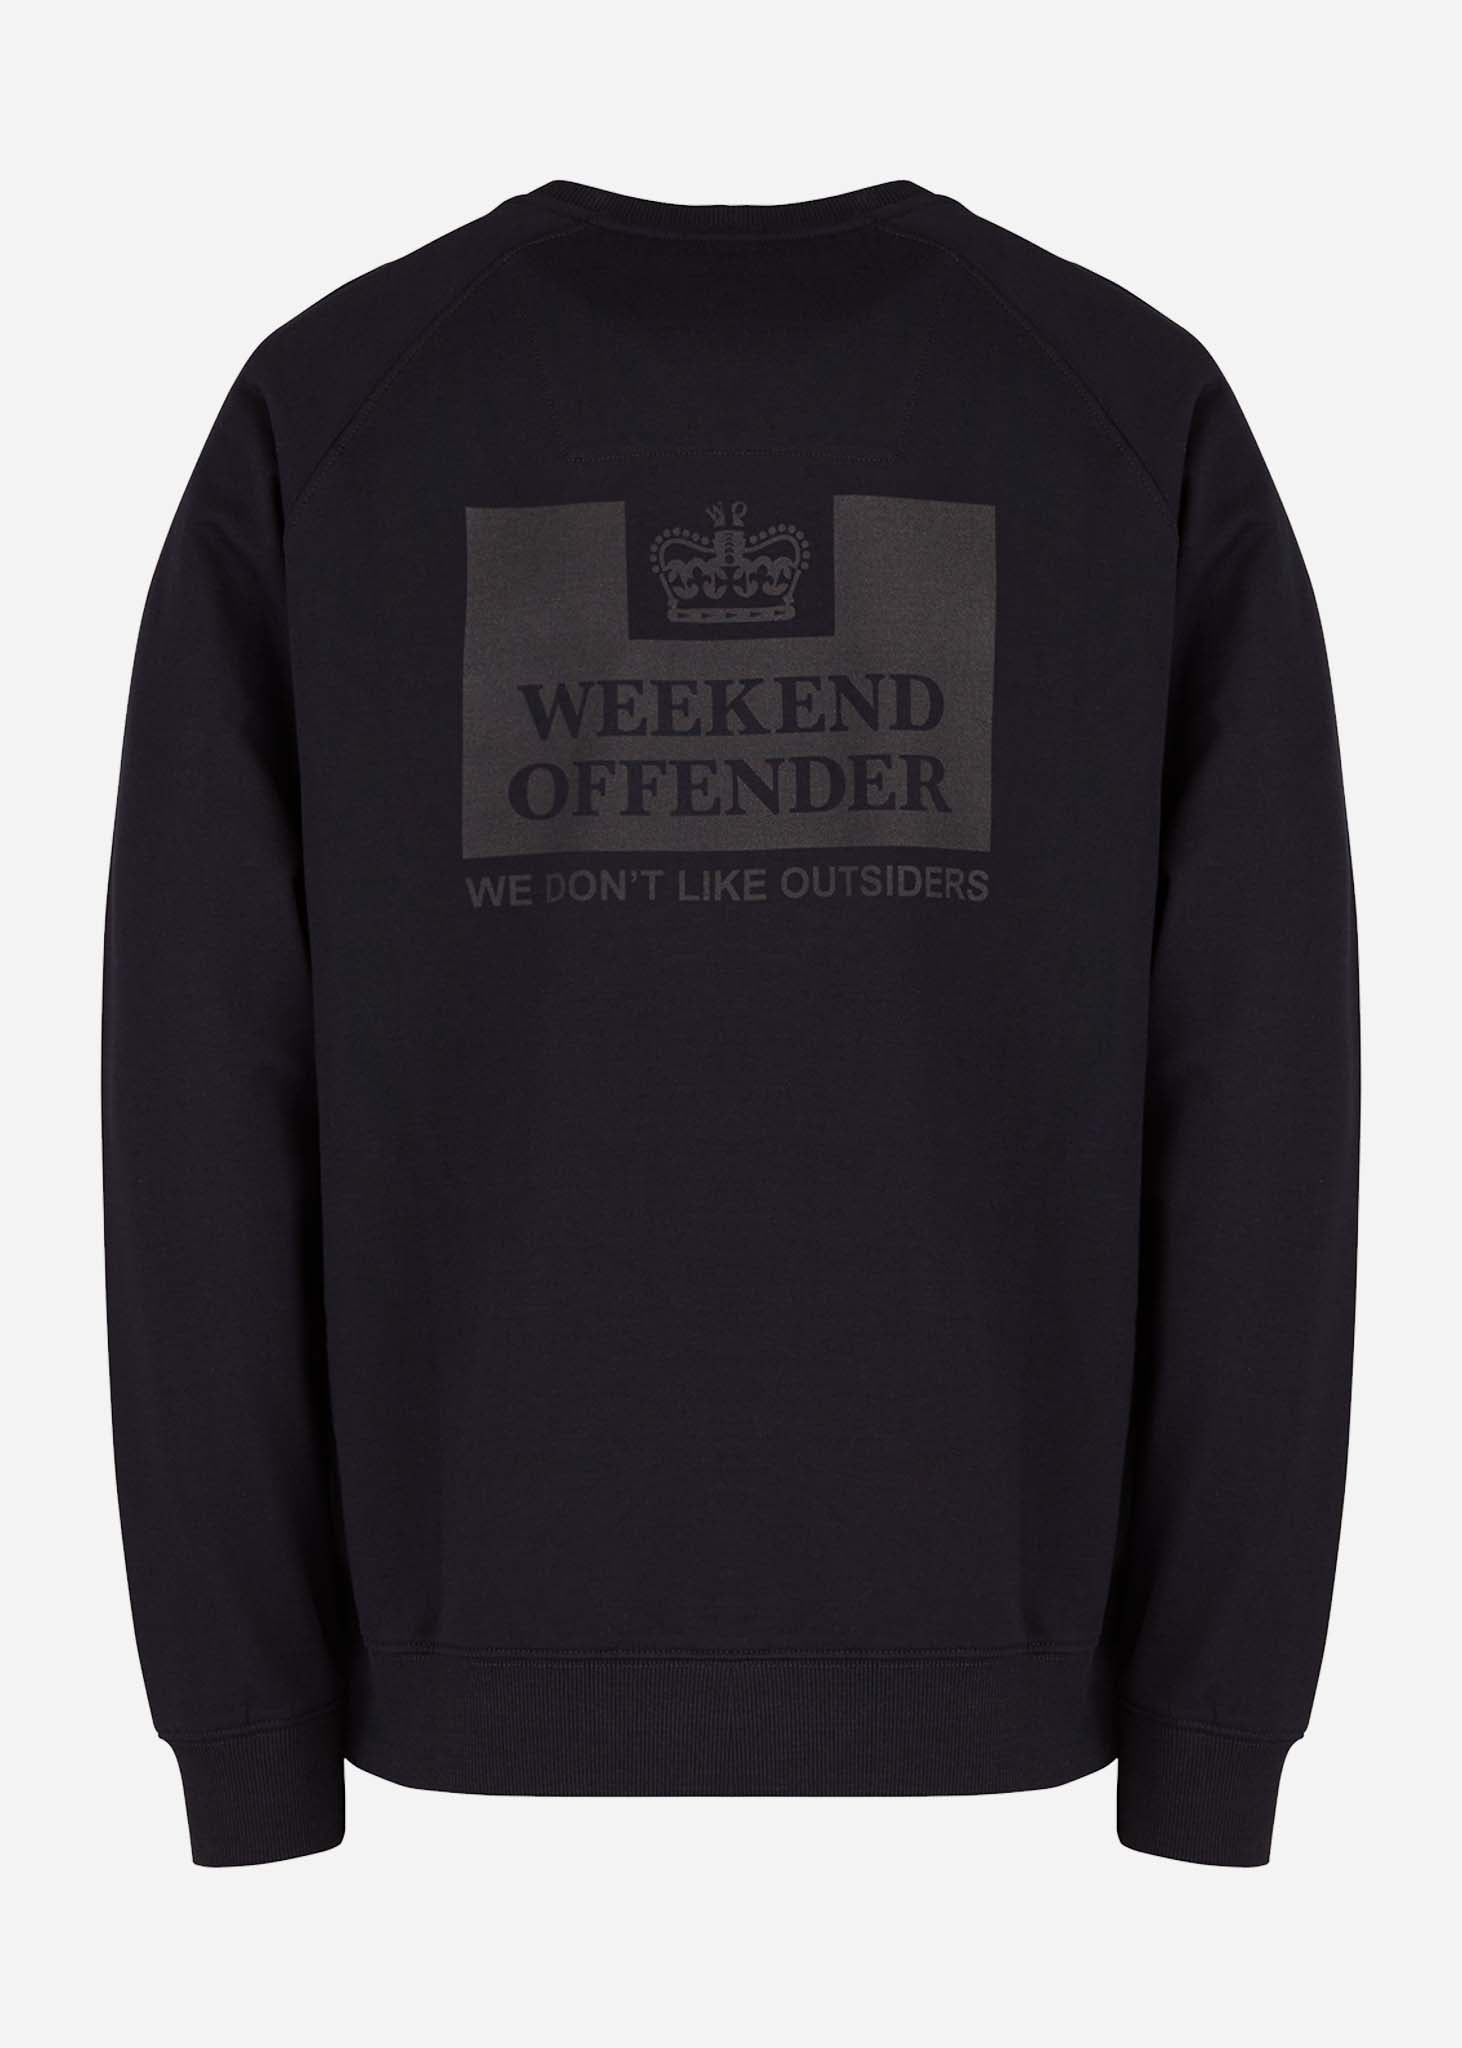 weekend offender sweater crewneck navy